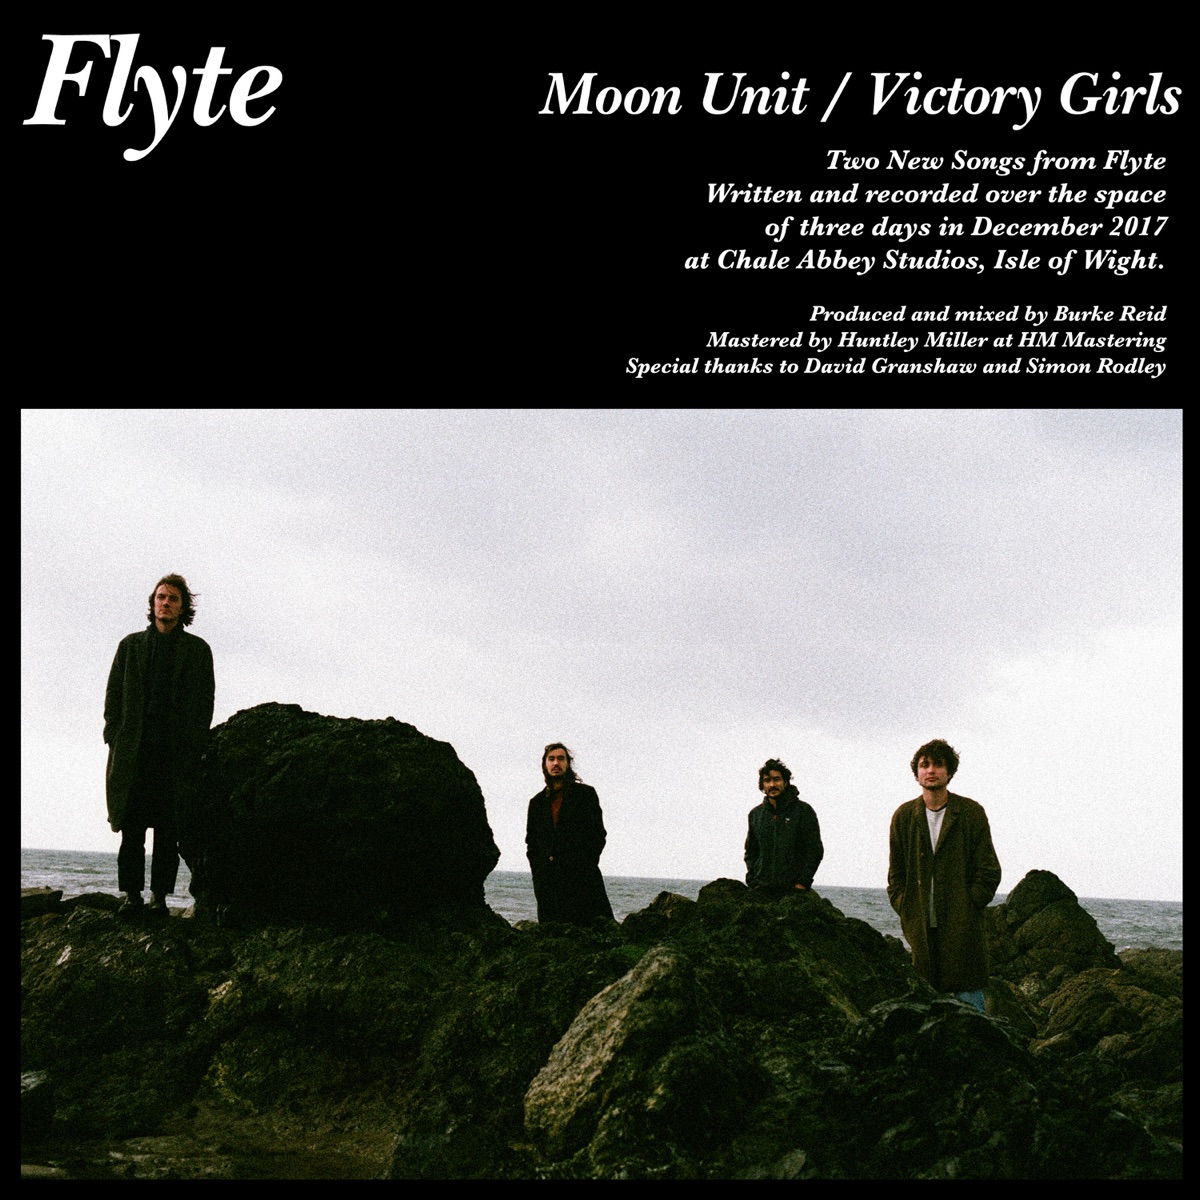 Moon Unit - Single - Album by Flyte - Apple Music